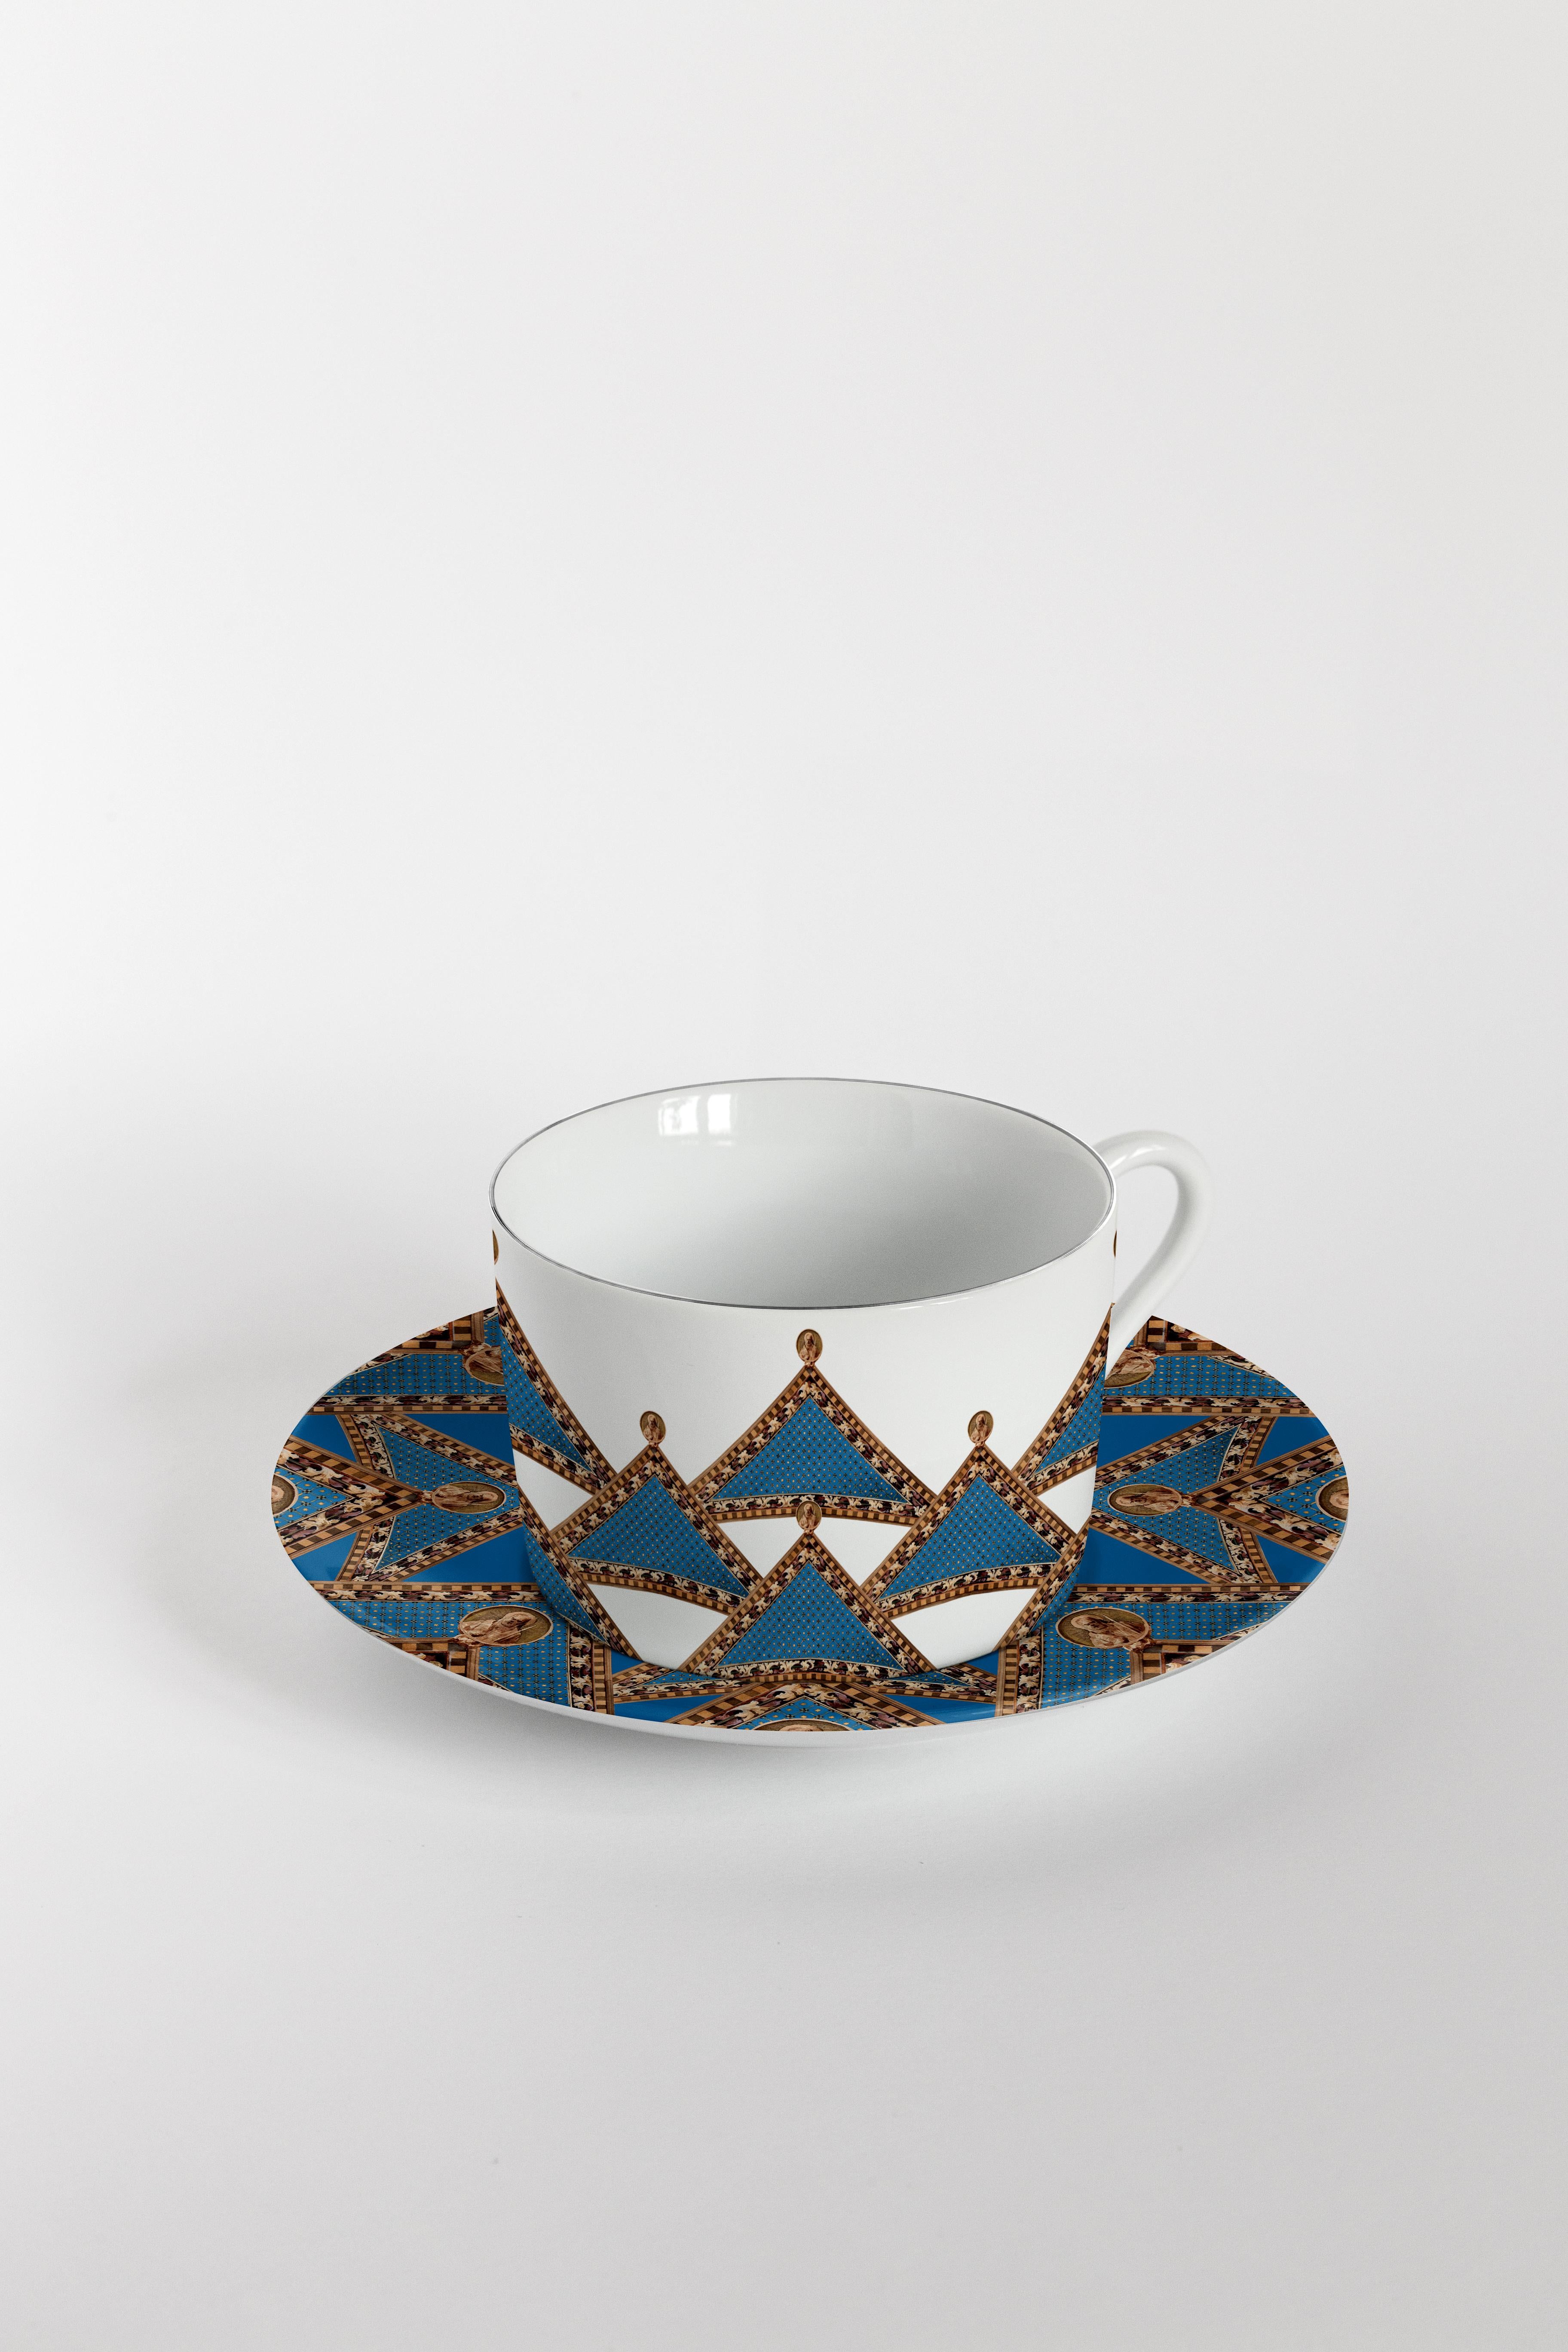 Le Volte Celesti, Six Contemporary Decorated Tea Cups with Plates For Sale 2